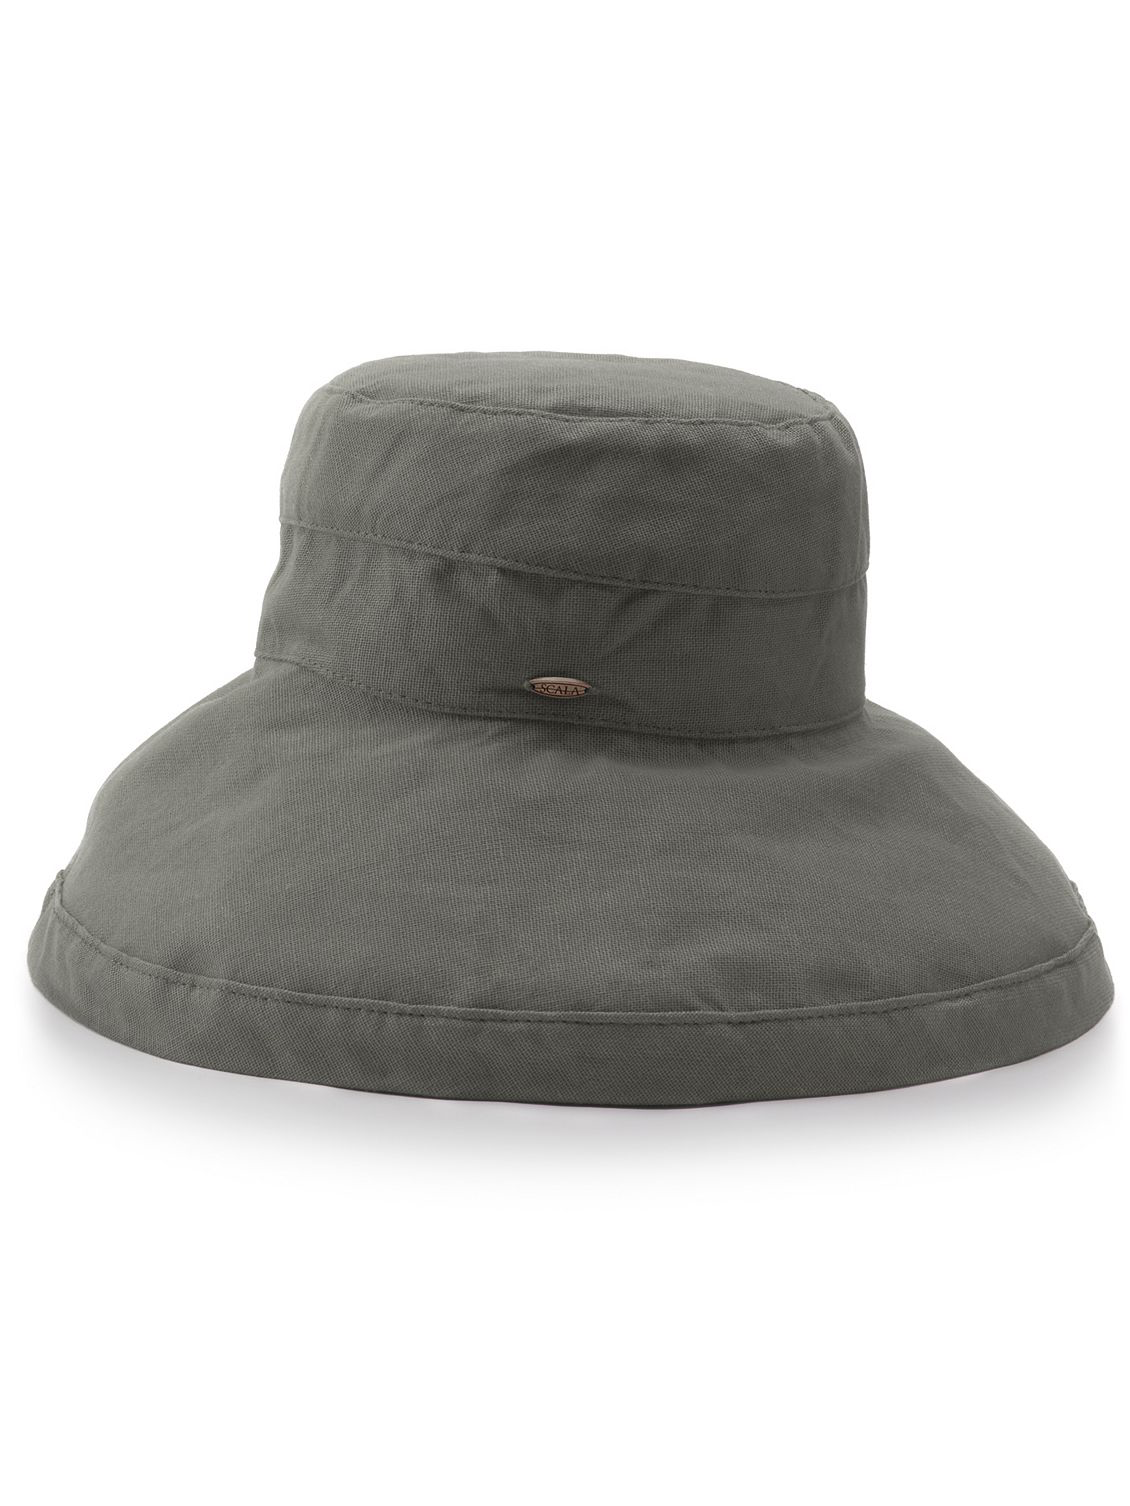 Scala/Dorfman Big Brim Cotton Sun Hat